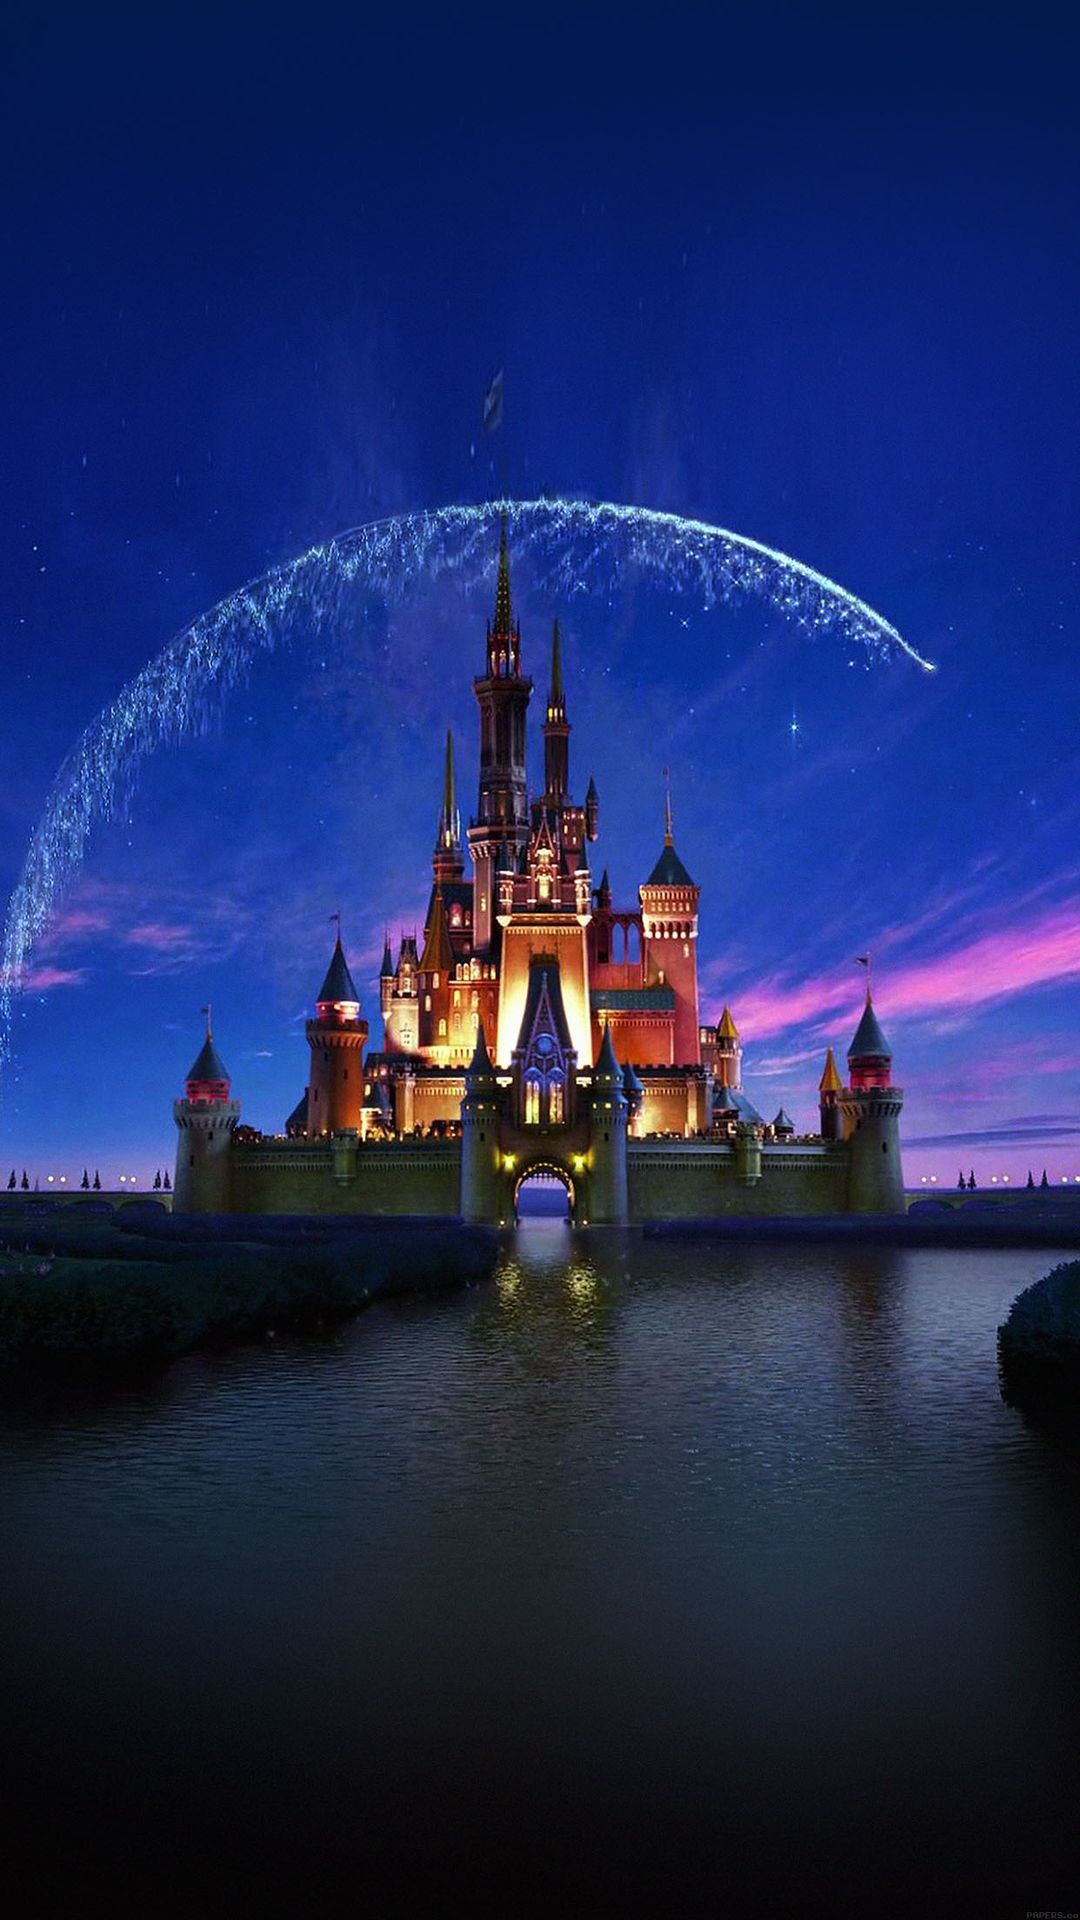 1080x1920 Tap image for more iPhone Disney wallpaper! Disney castle artwork -  @mobile9 | Wallpapers